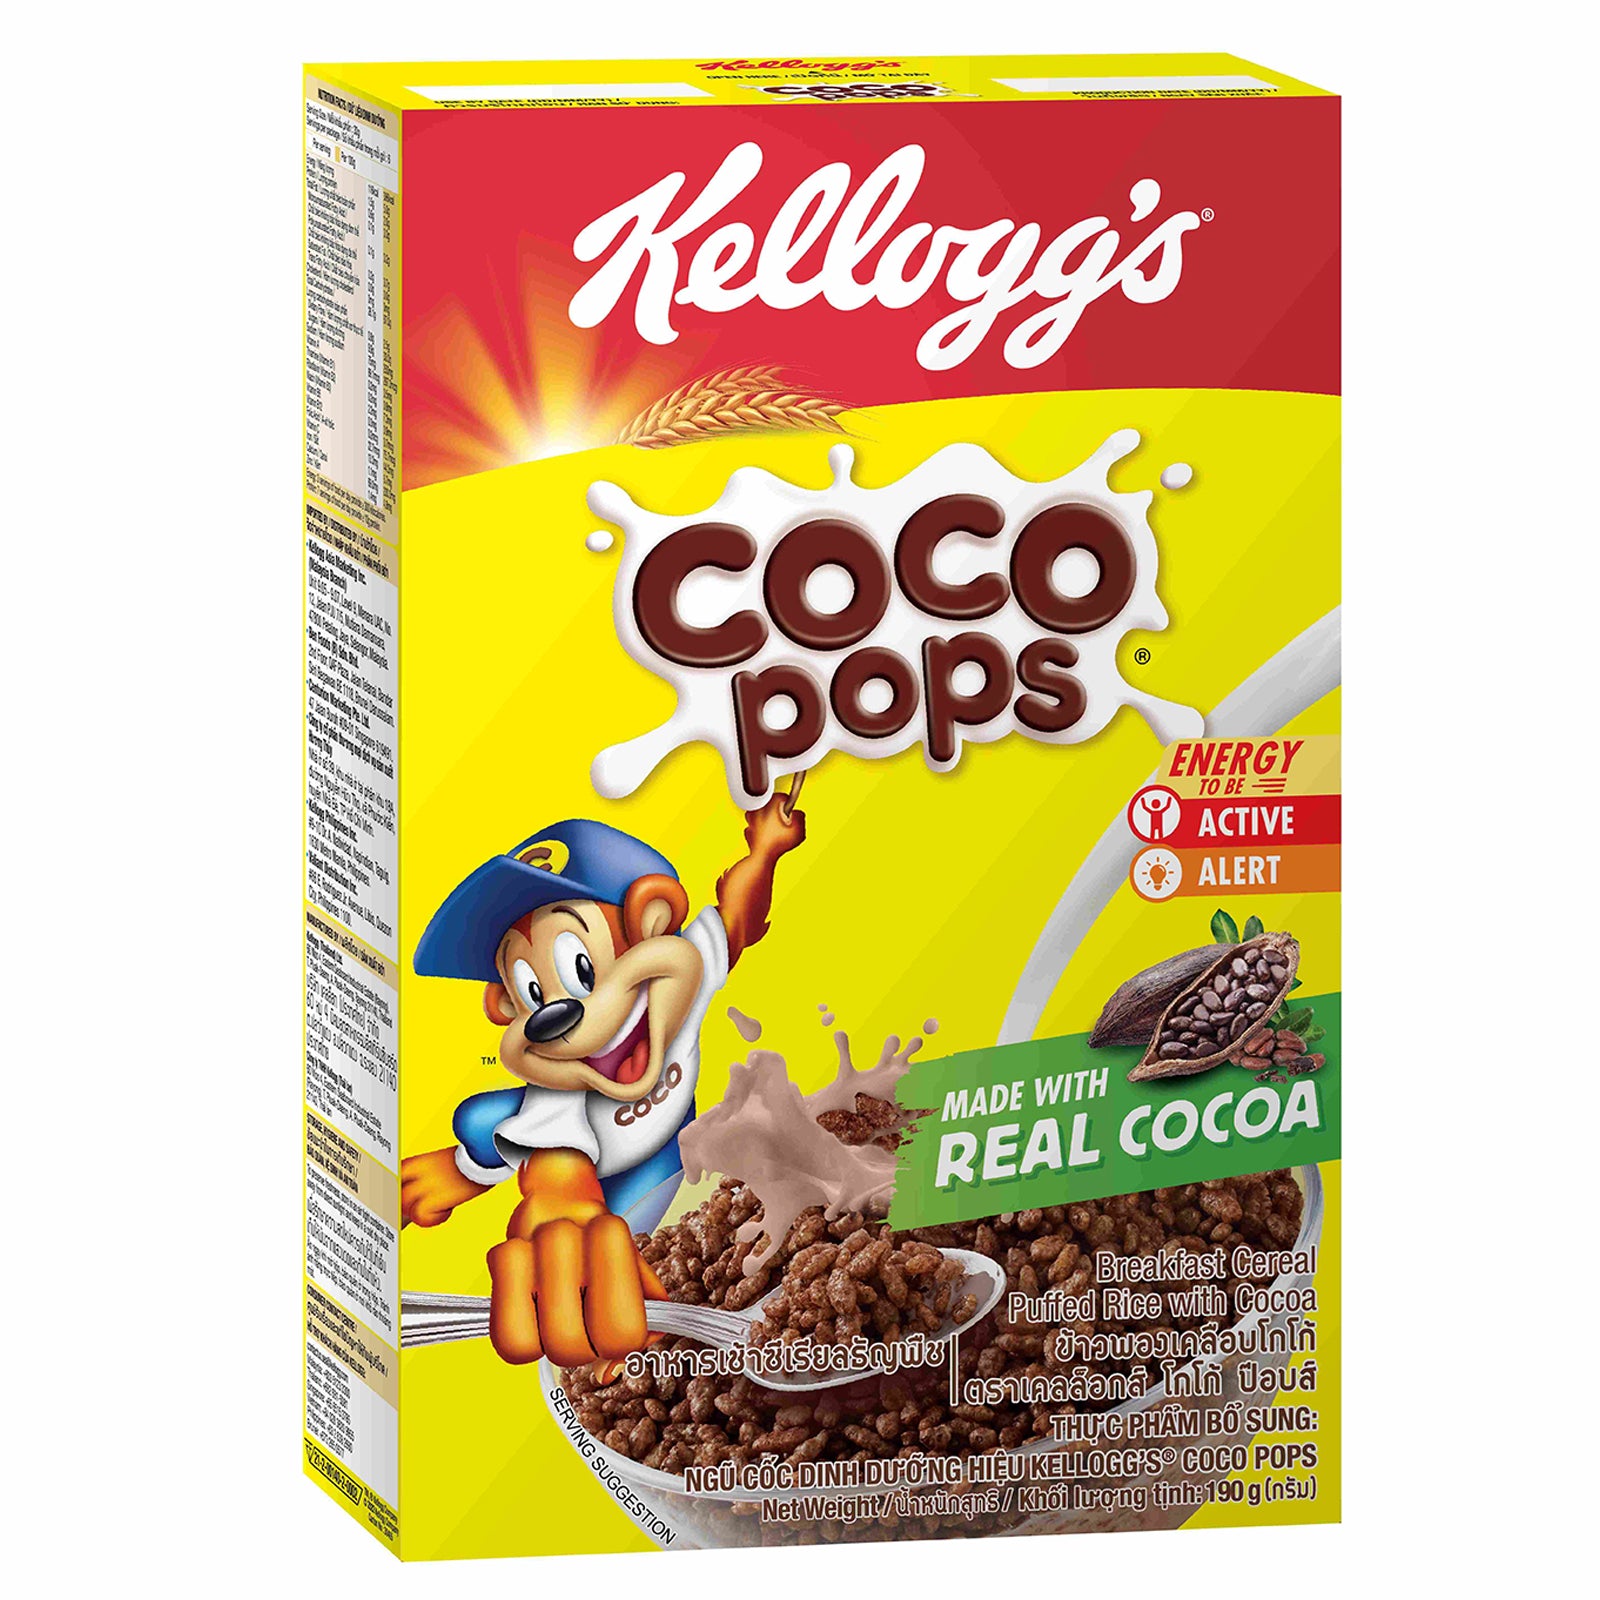 Kellogg's Honey & Nuts Corn Flakes 360g 